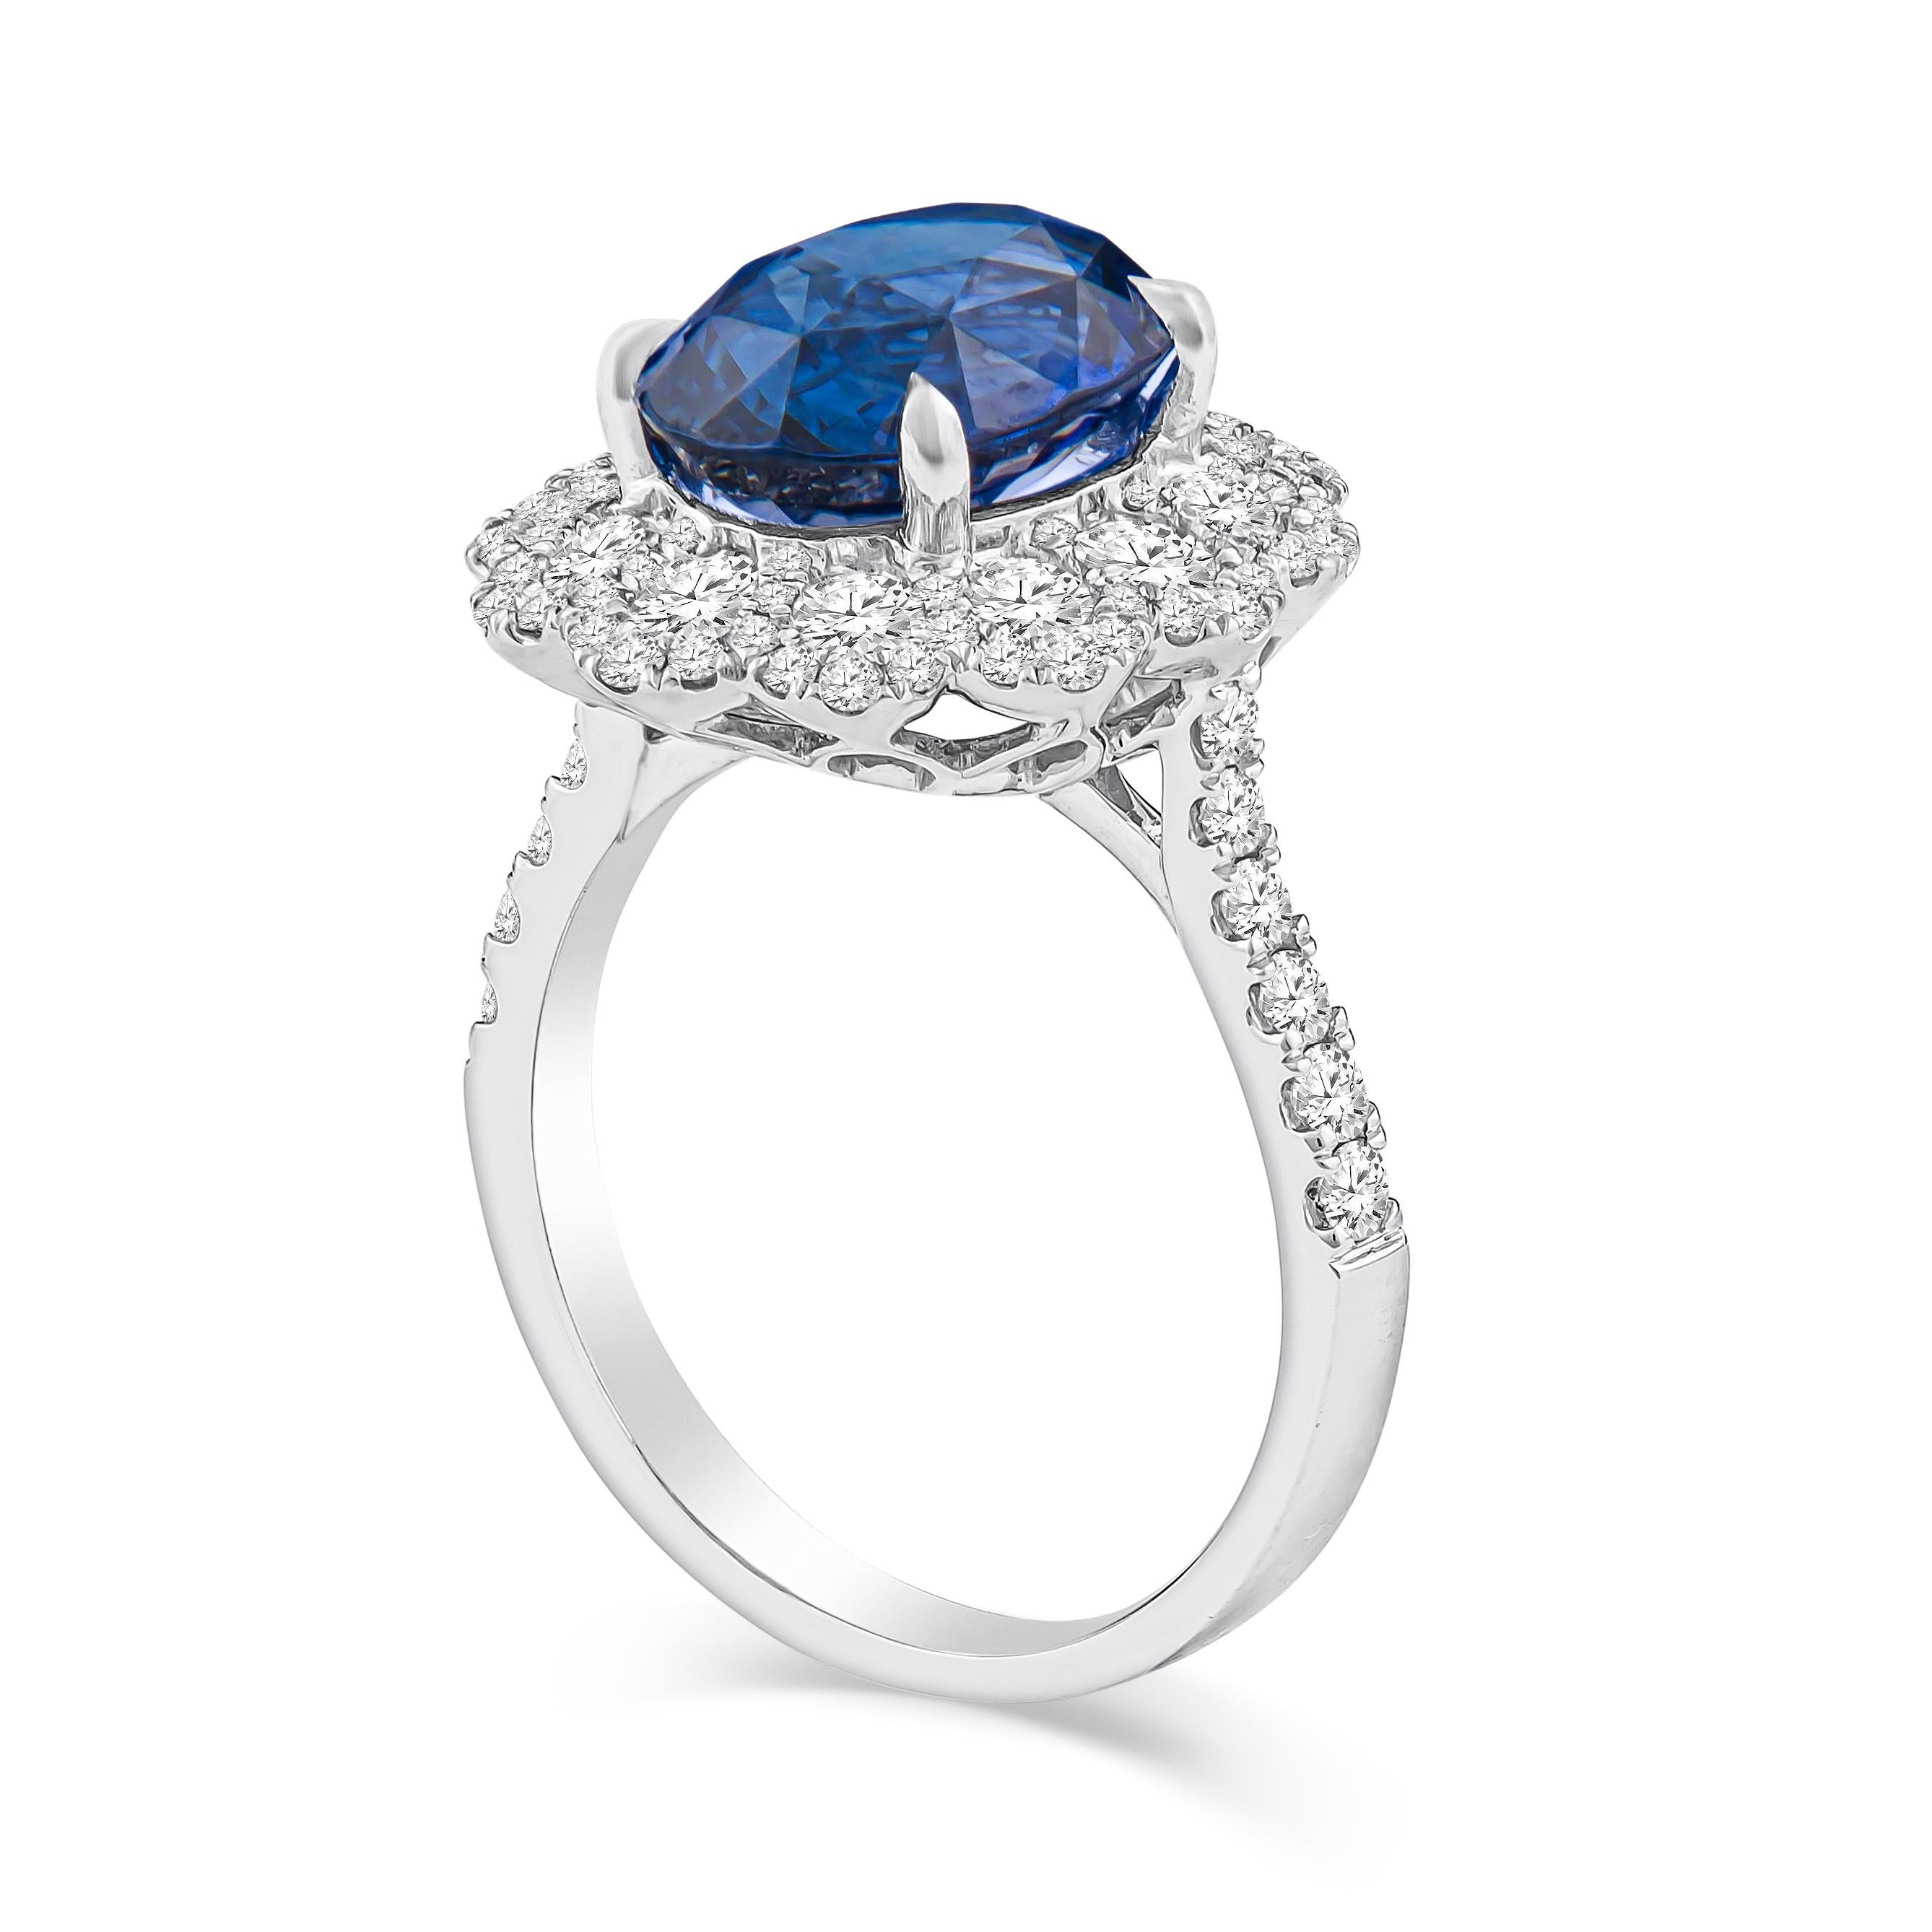 Romantic 5.09 Carat Natural Oval Blue Sapphire 'GIA' Flower Style Diamond Ring, 18 Karat